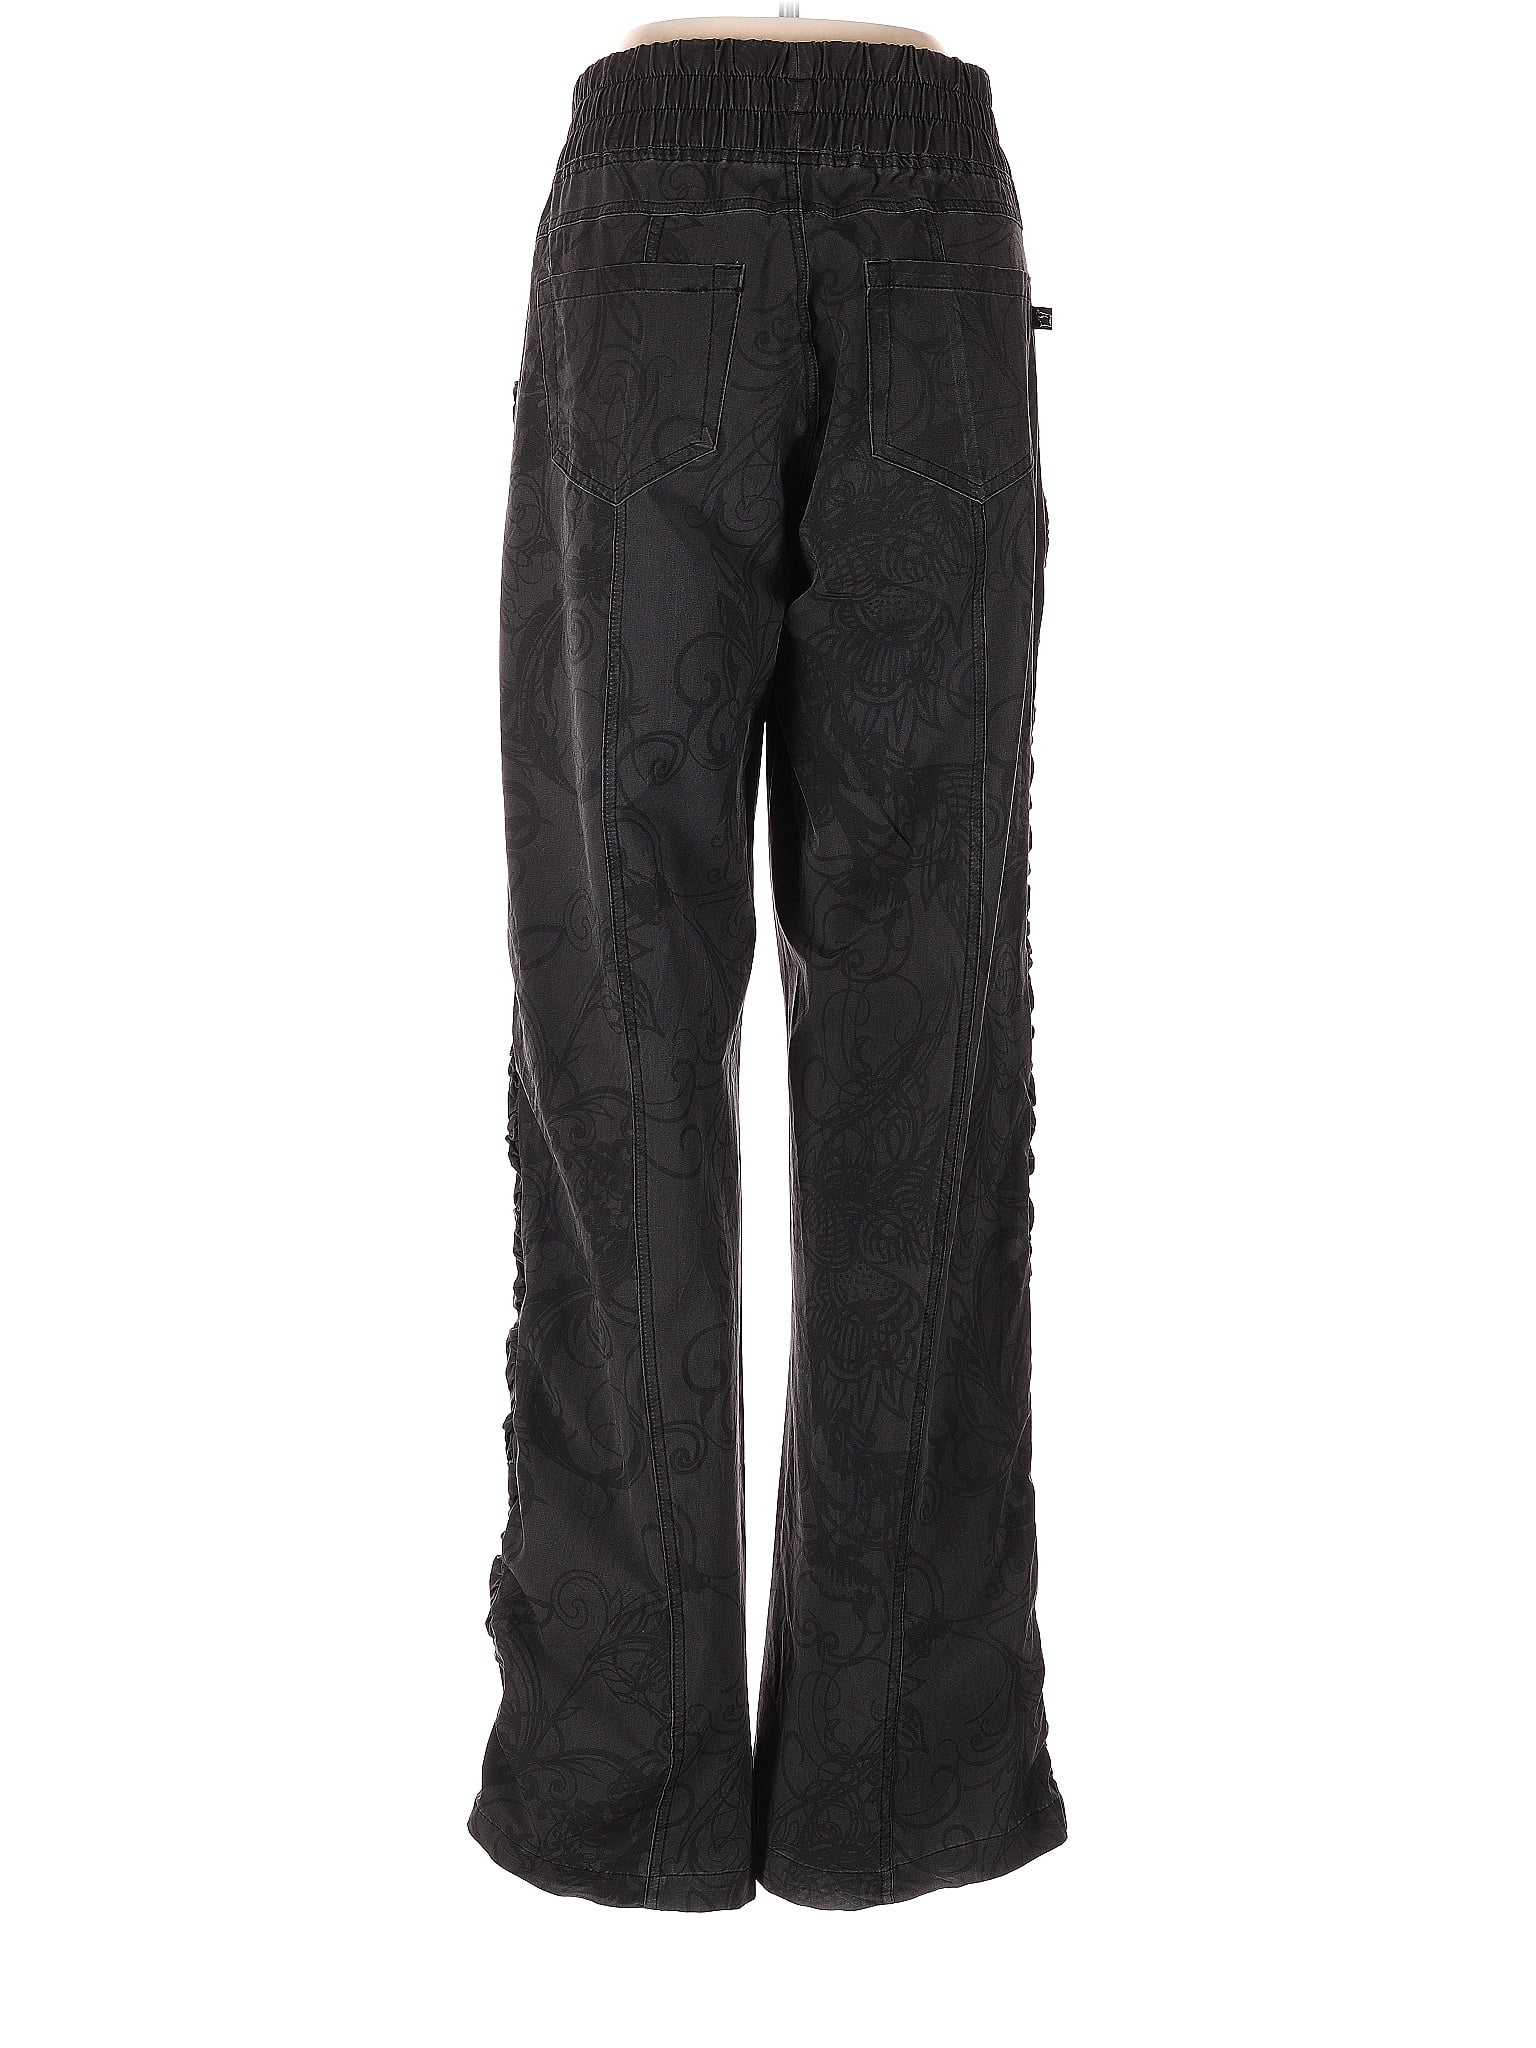 Spyder Black Active Pants Size S - 69% off